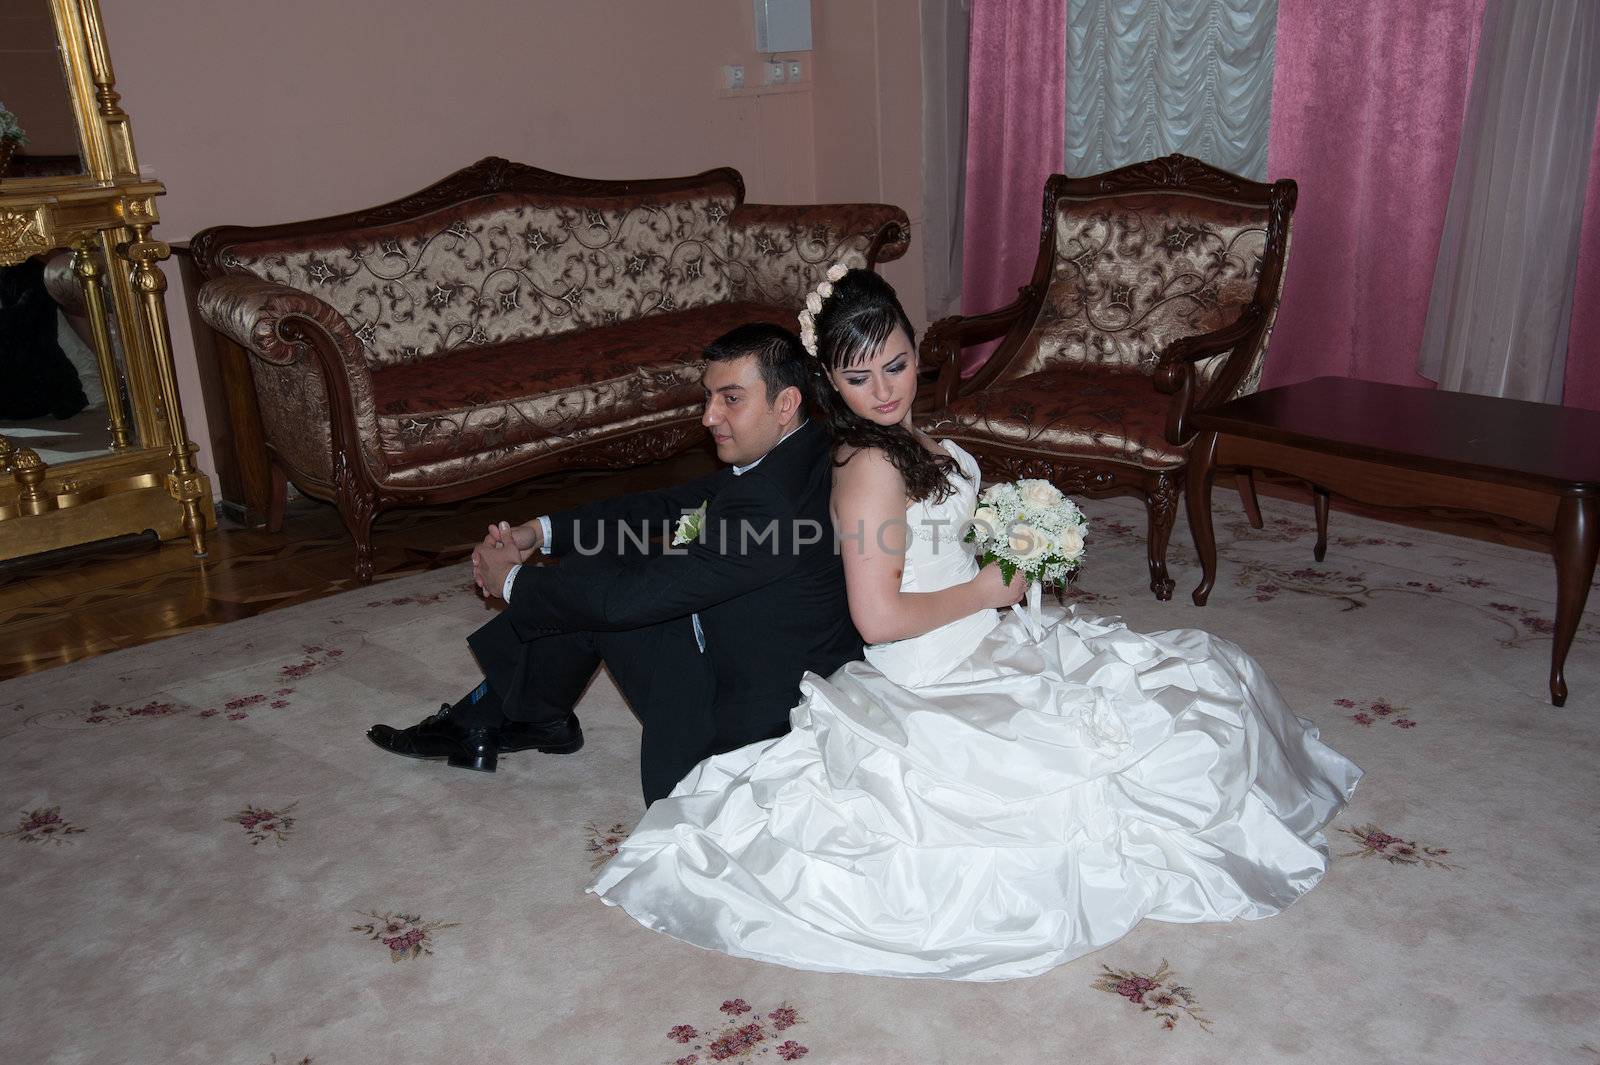 bride and groom by raduga21